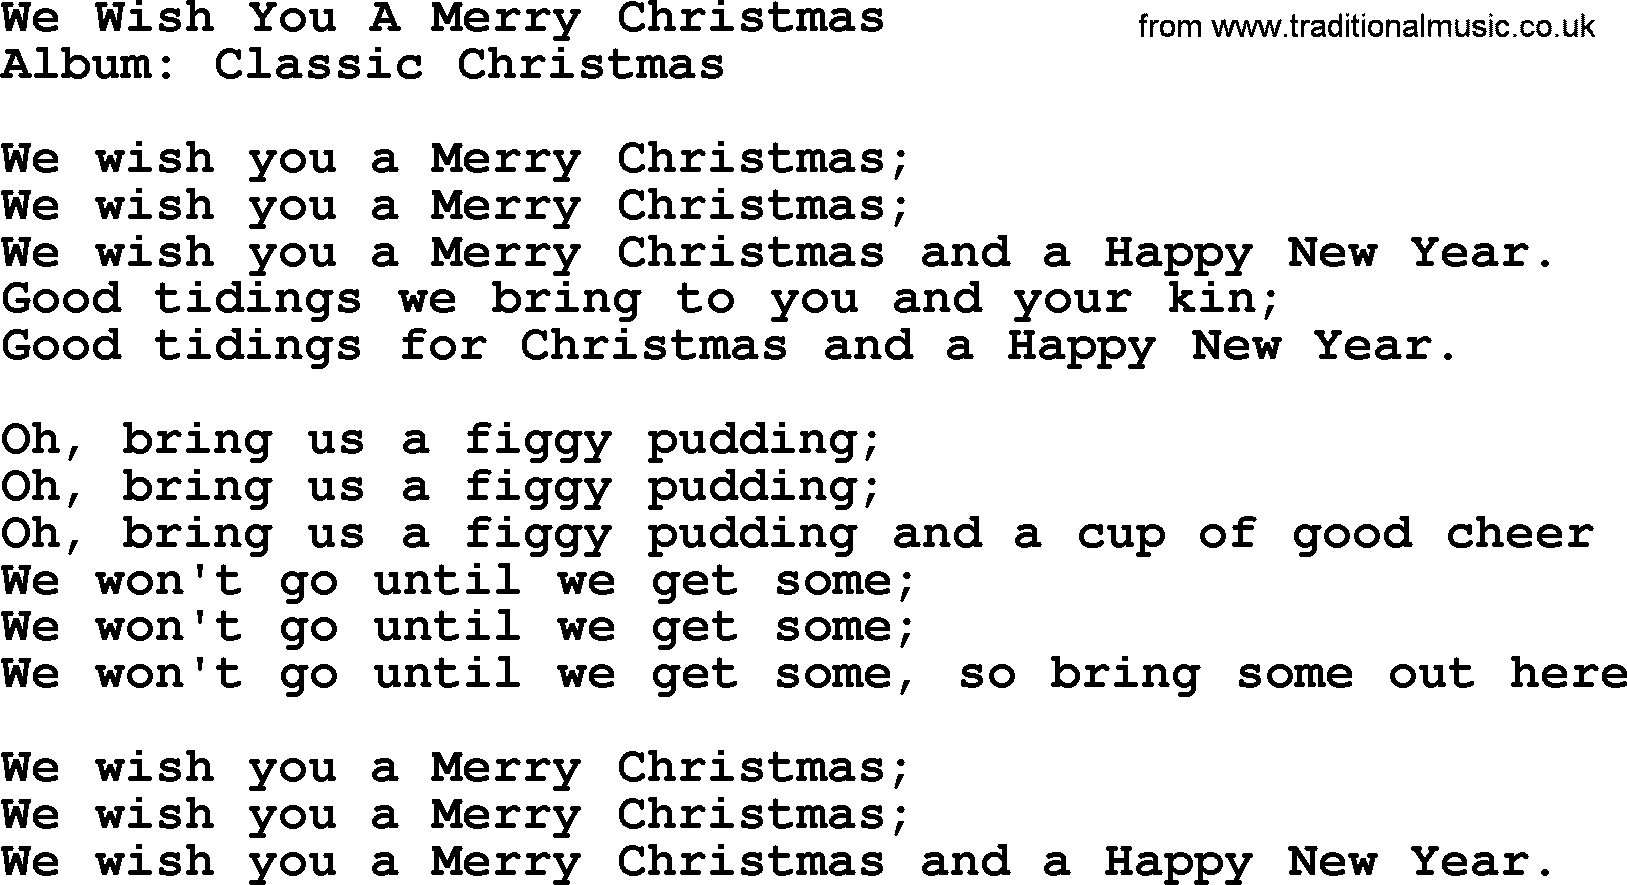 George Strait song: We Wish You A Merry Christmas, lyrics